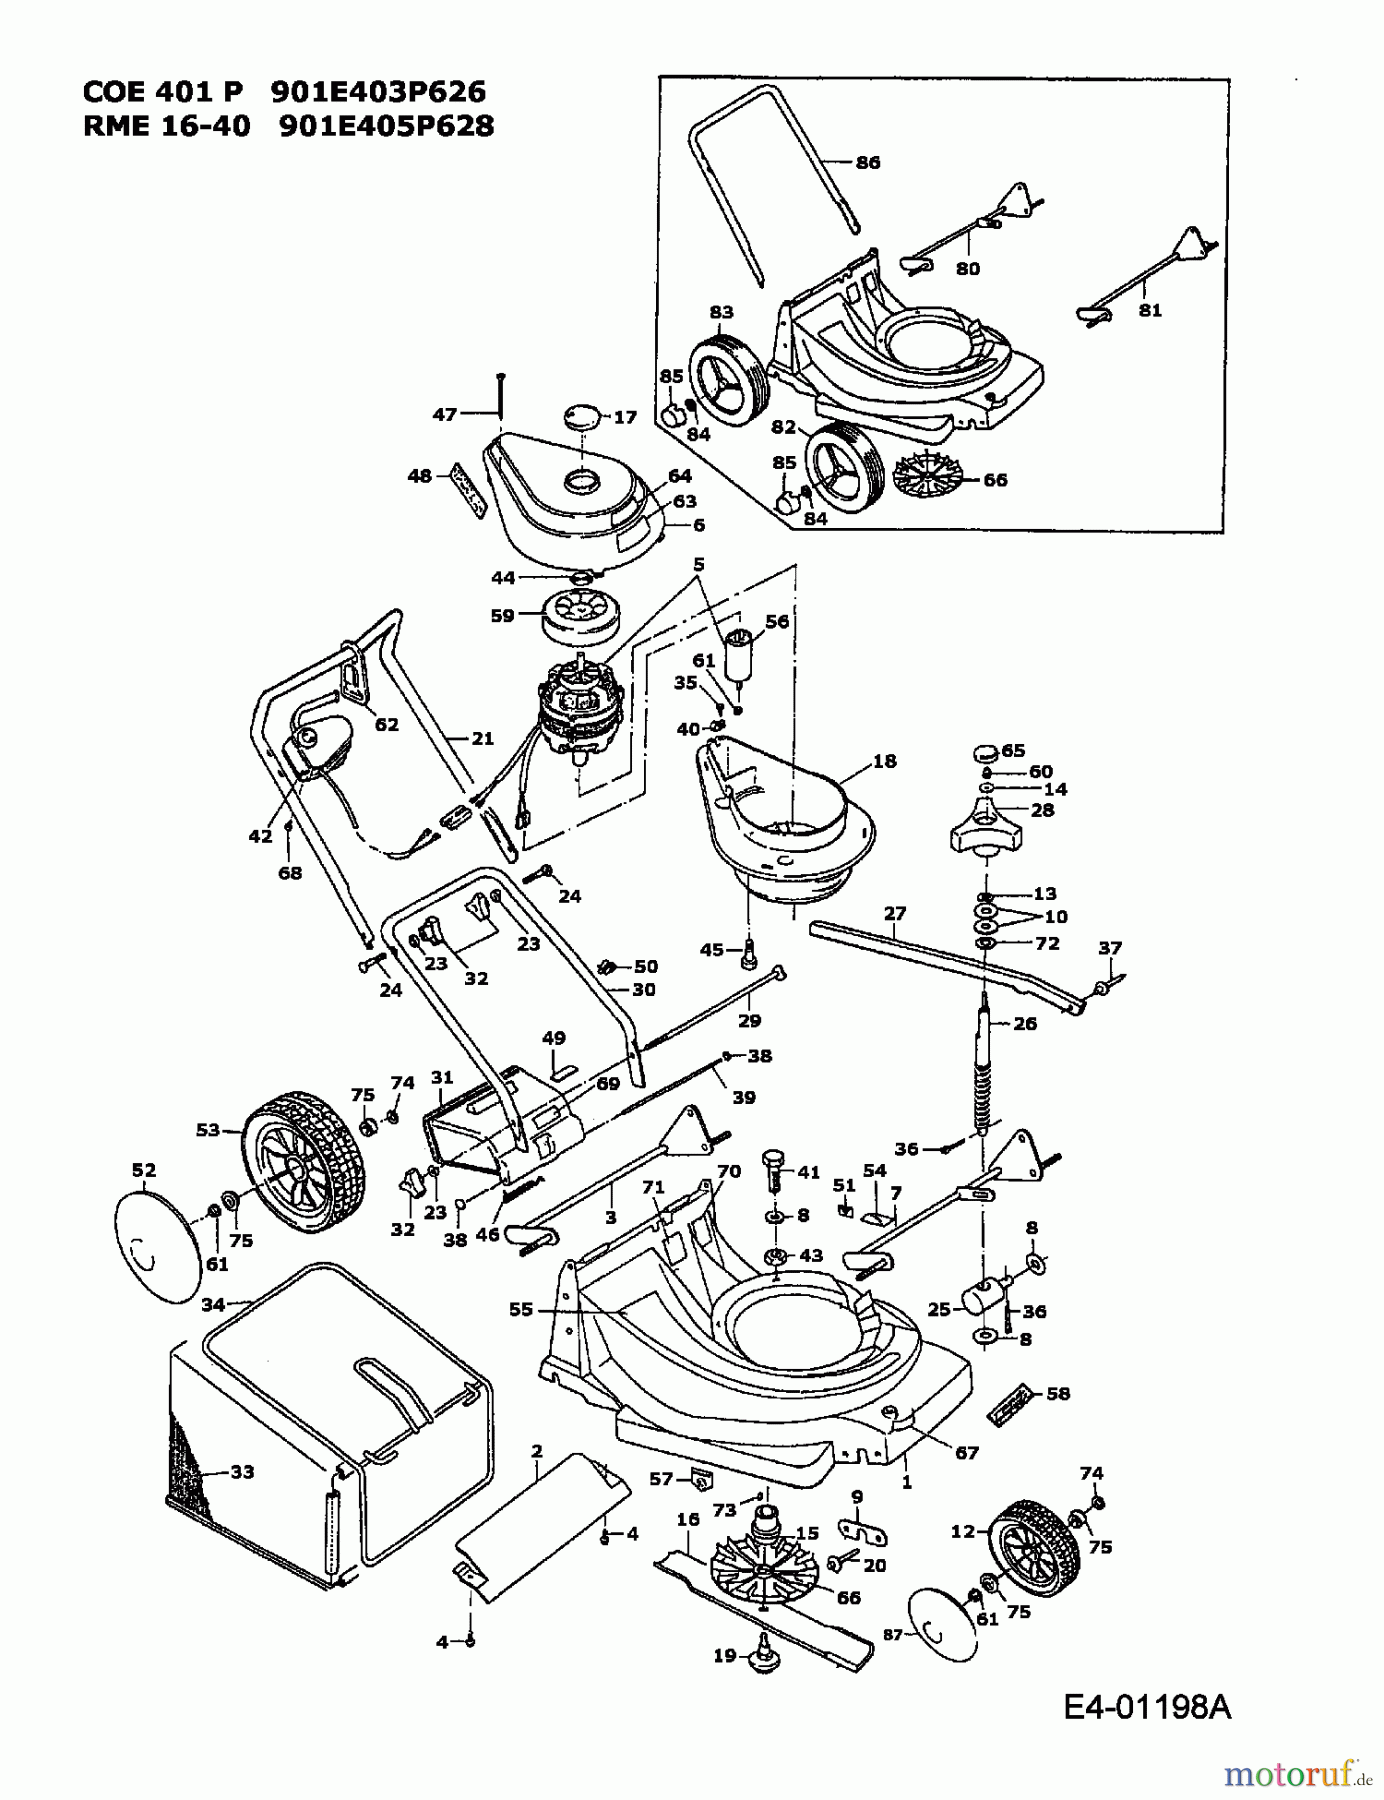  Raiffeisen Electric mower RME 16-40 901E405P628  (1995) Basic machine